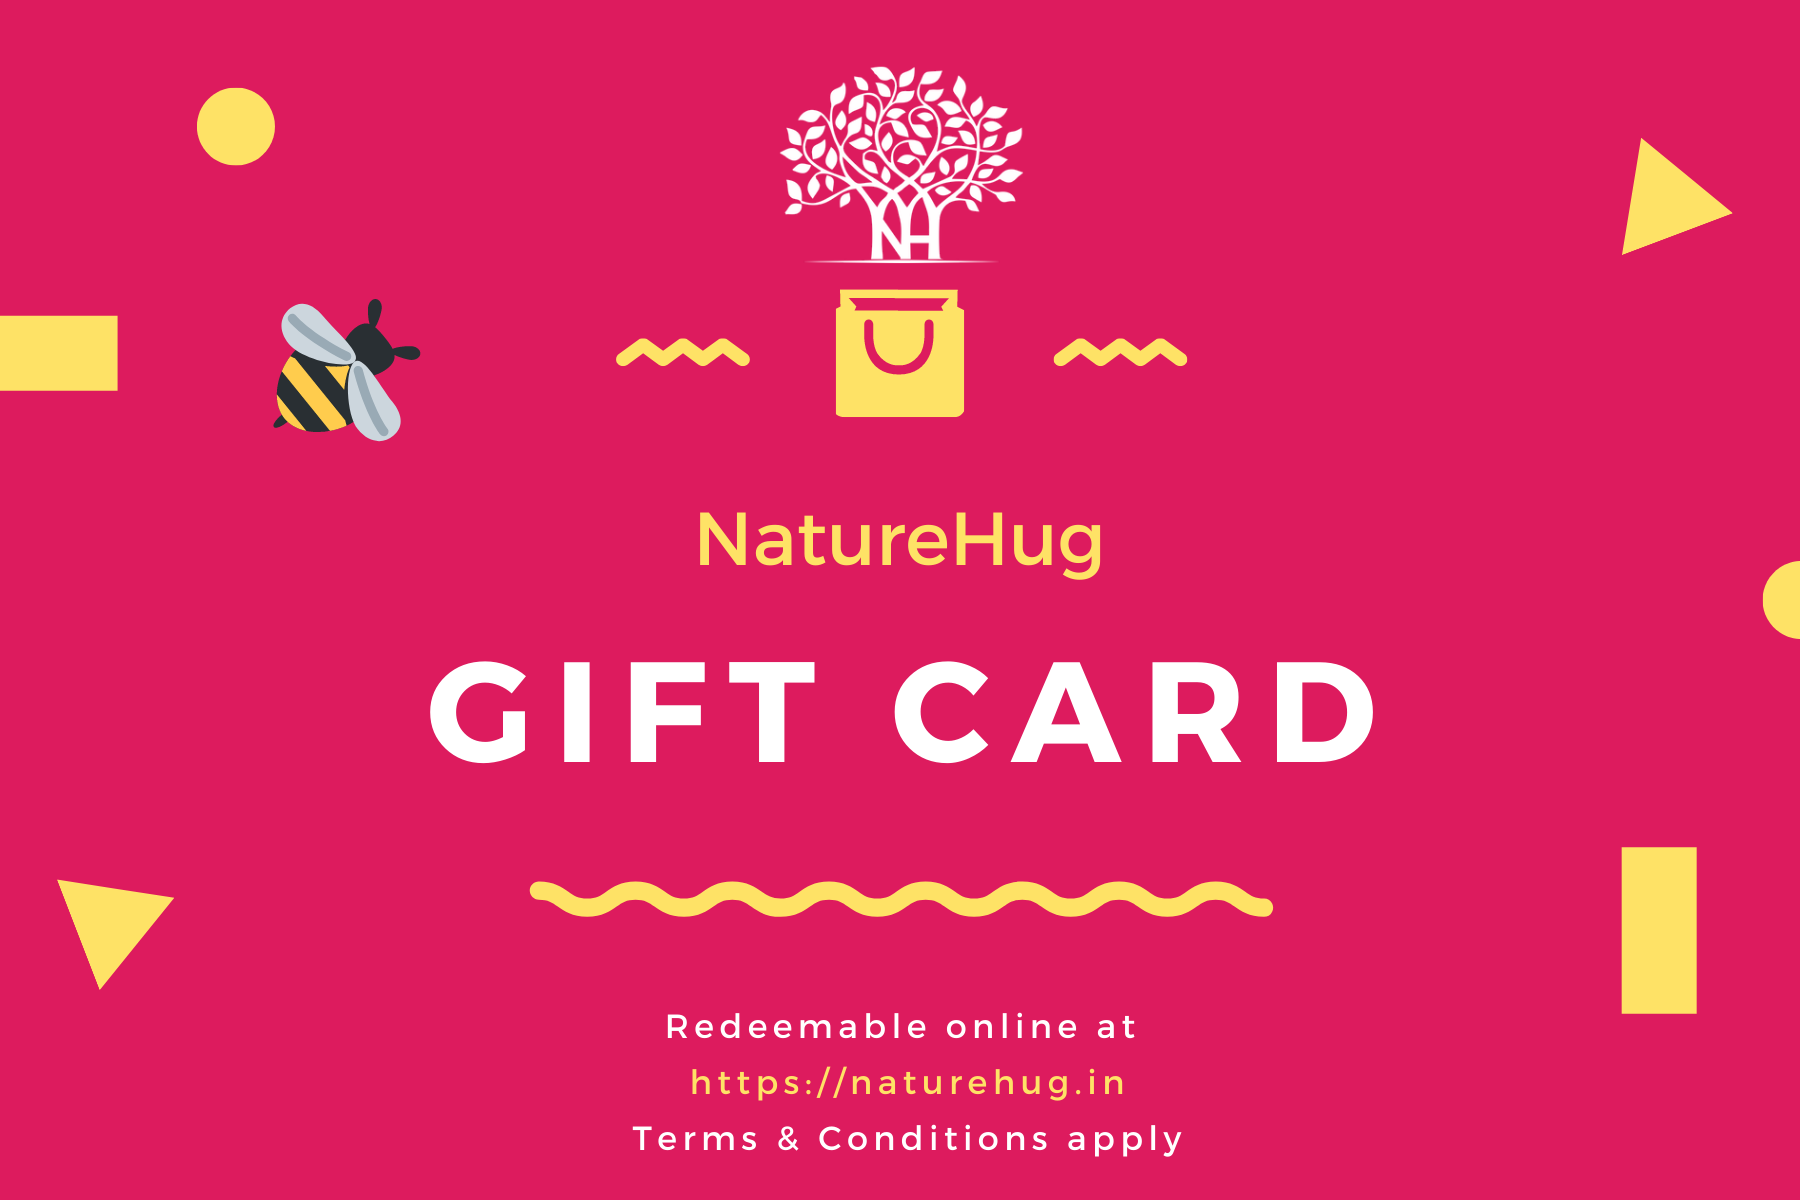 NatureHug Gift Card